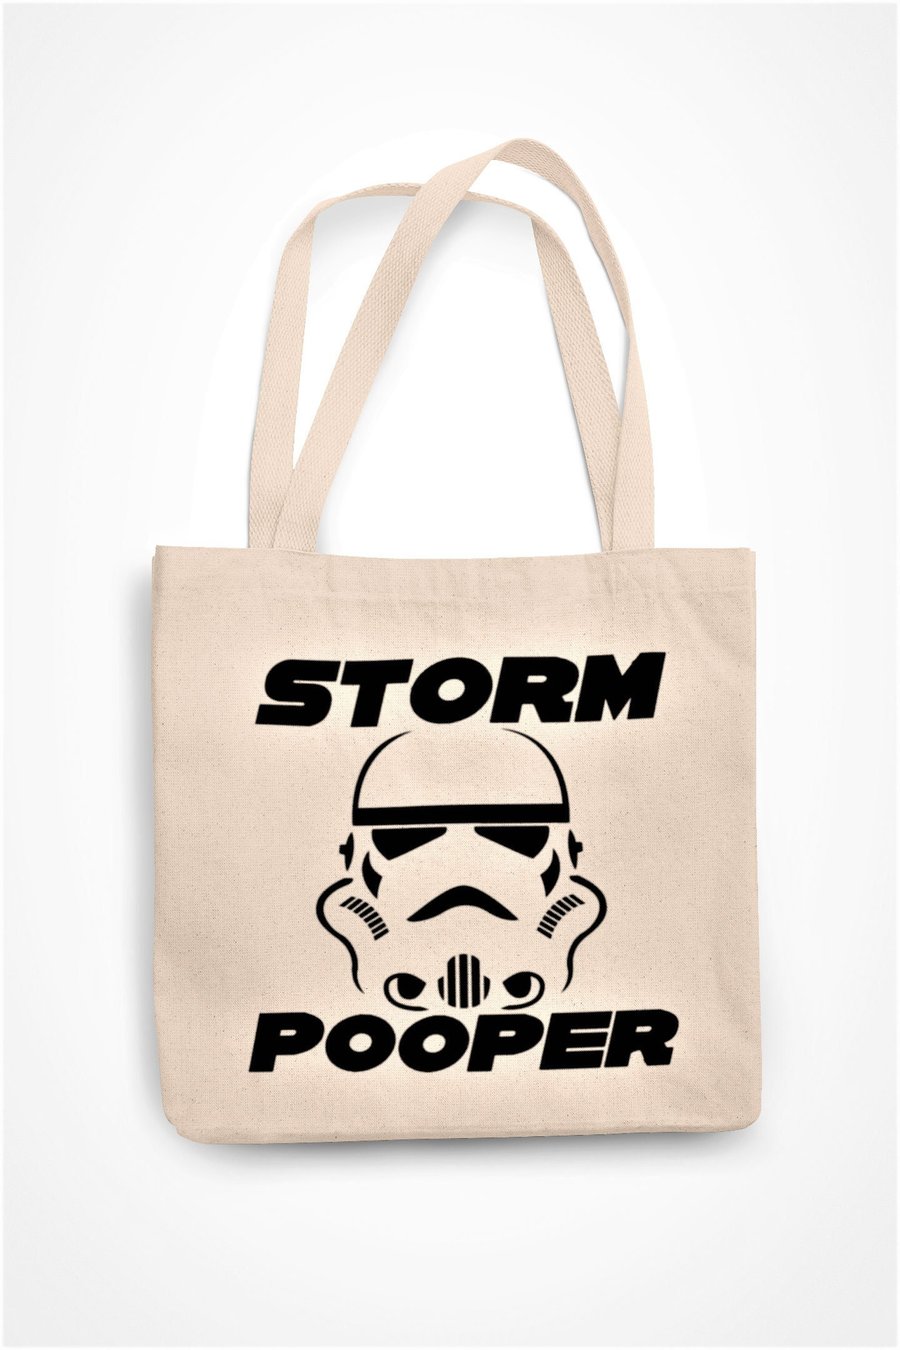 Storm Pooper Tote Bag Funny Novelty Star Wars Sci Fi Joke Funny Gift For Friends